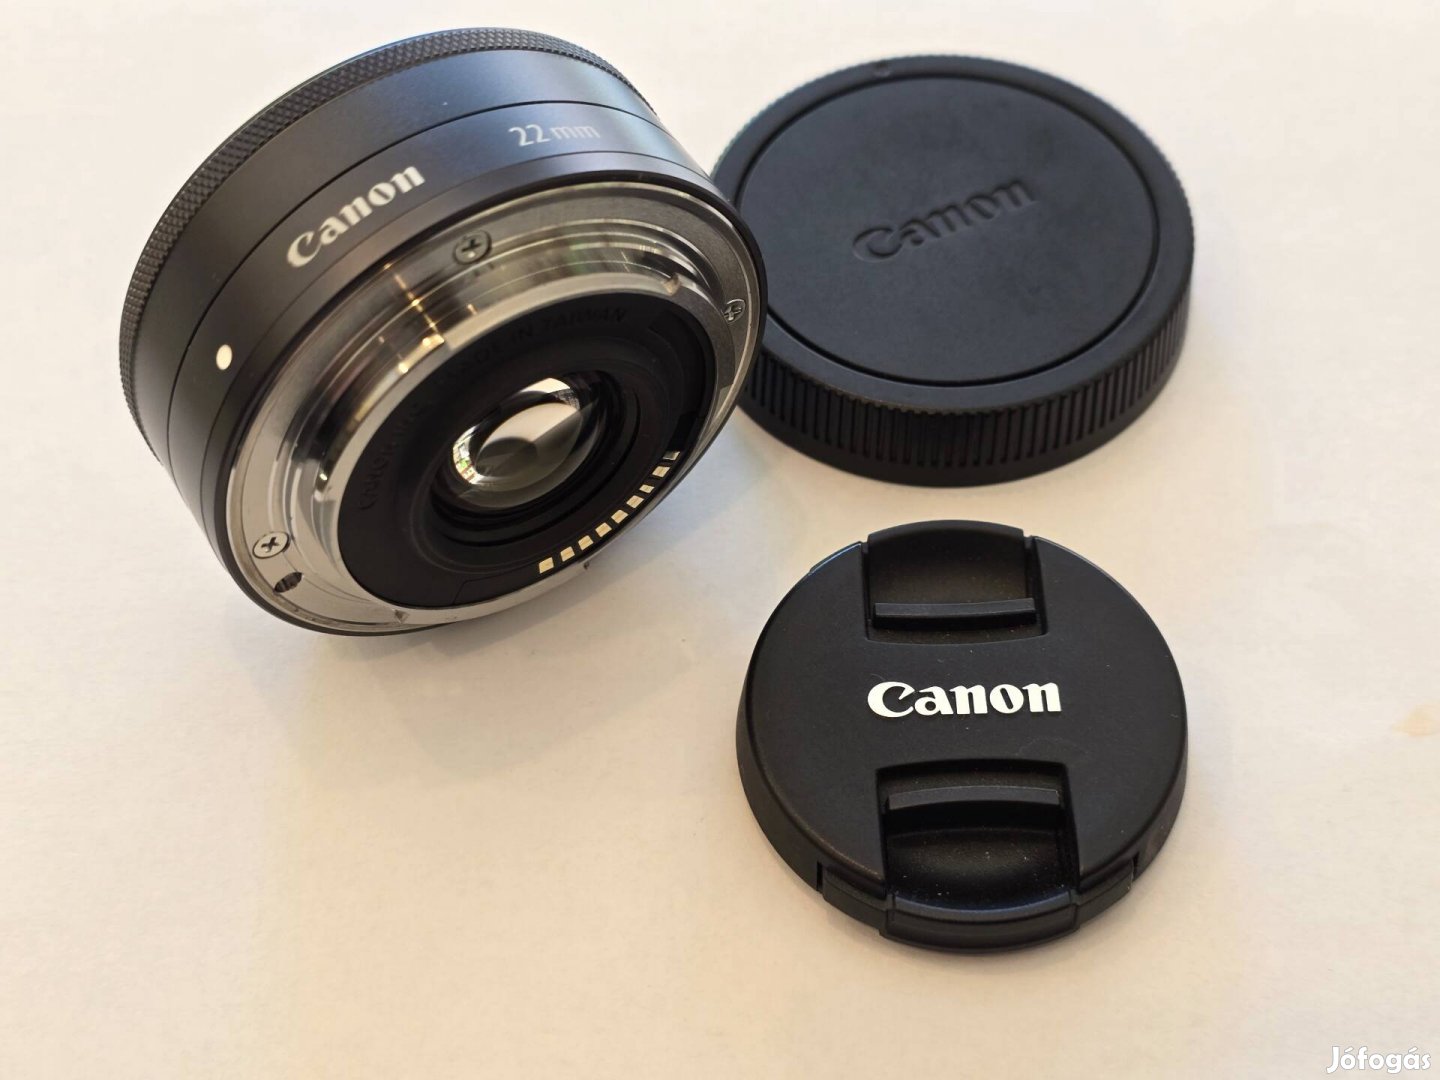 Canon EF-M 22mm f/2